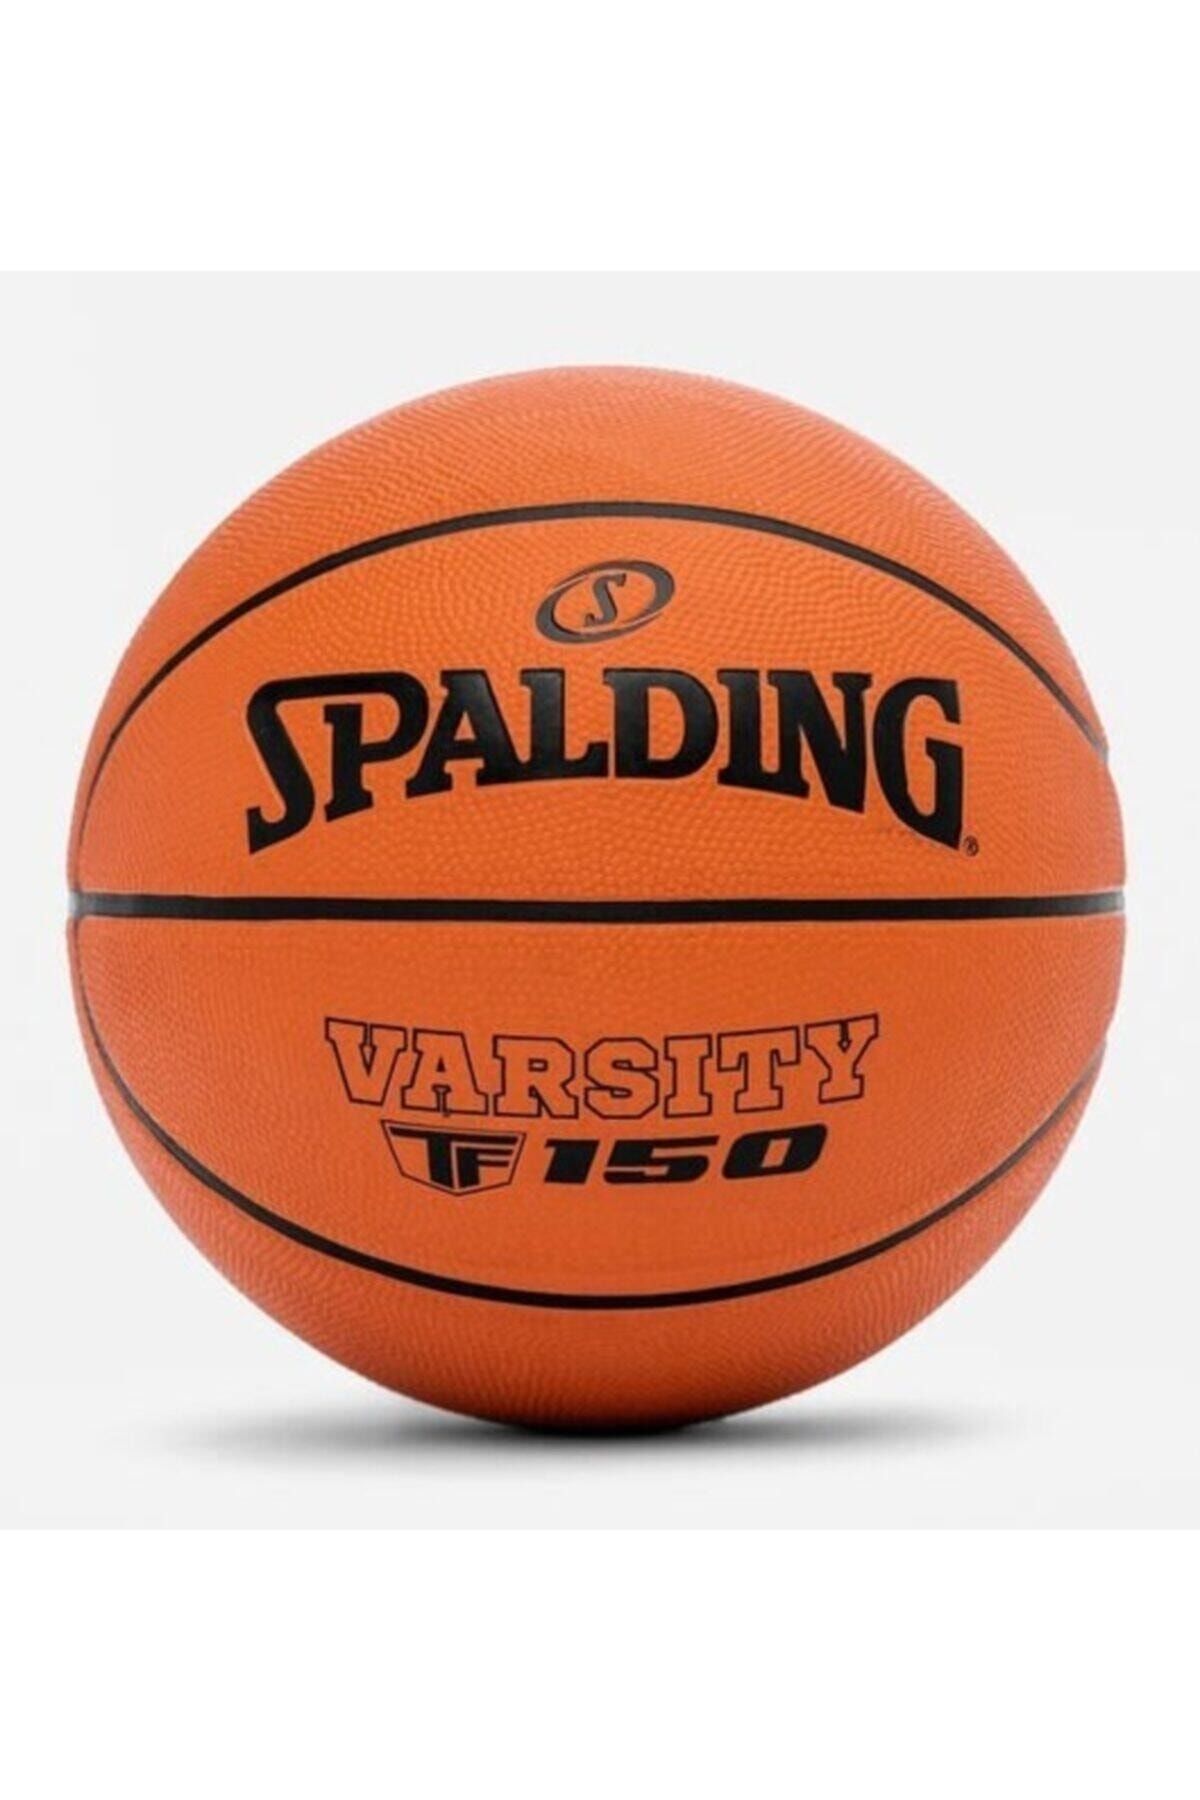 Spalding Basketbol Topu Tf 150 (varsıty) 7 Numara